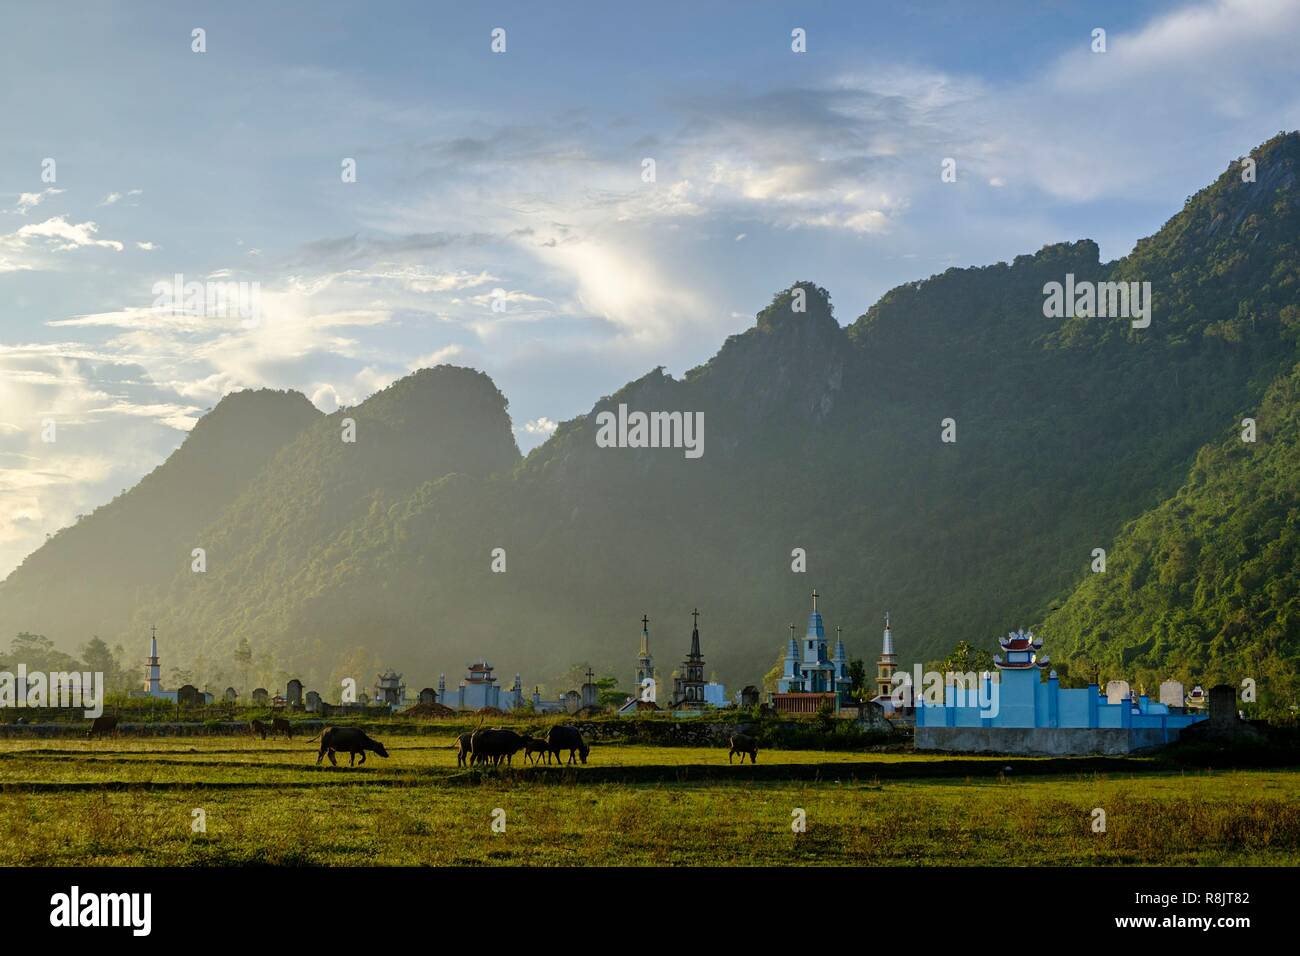 Vietnam, Quang Binh province, National park of Phong Nha-Ke Bang listed as World Heritage by UNESCO, farmers Stock Photo